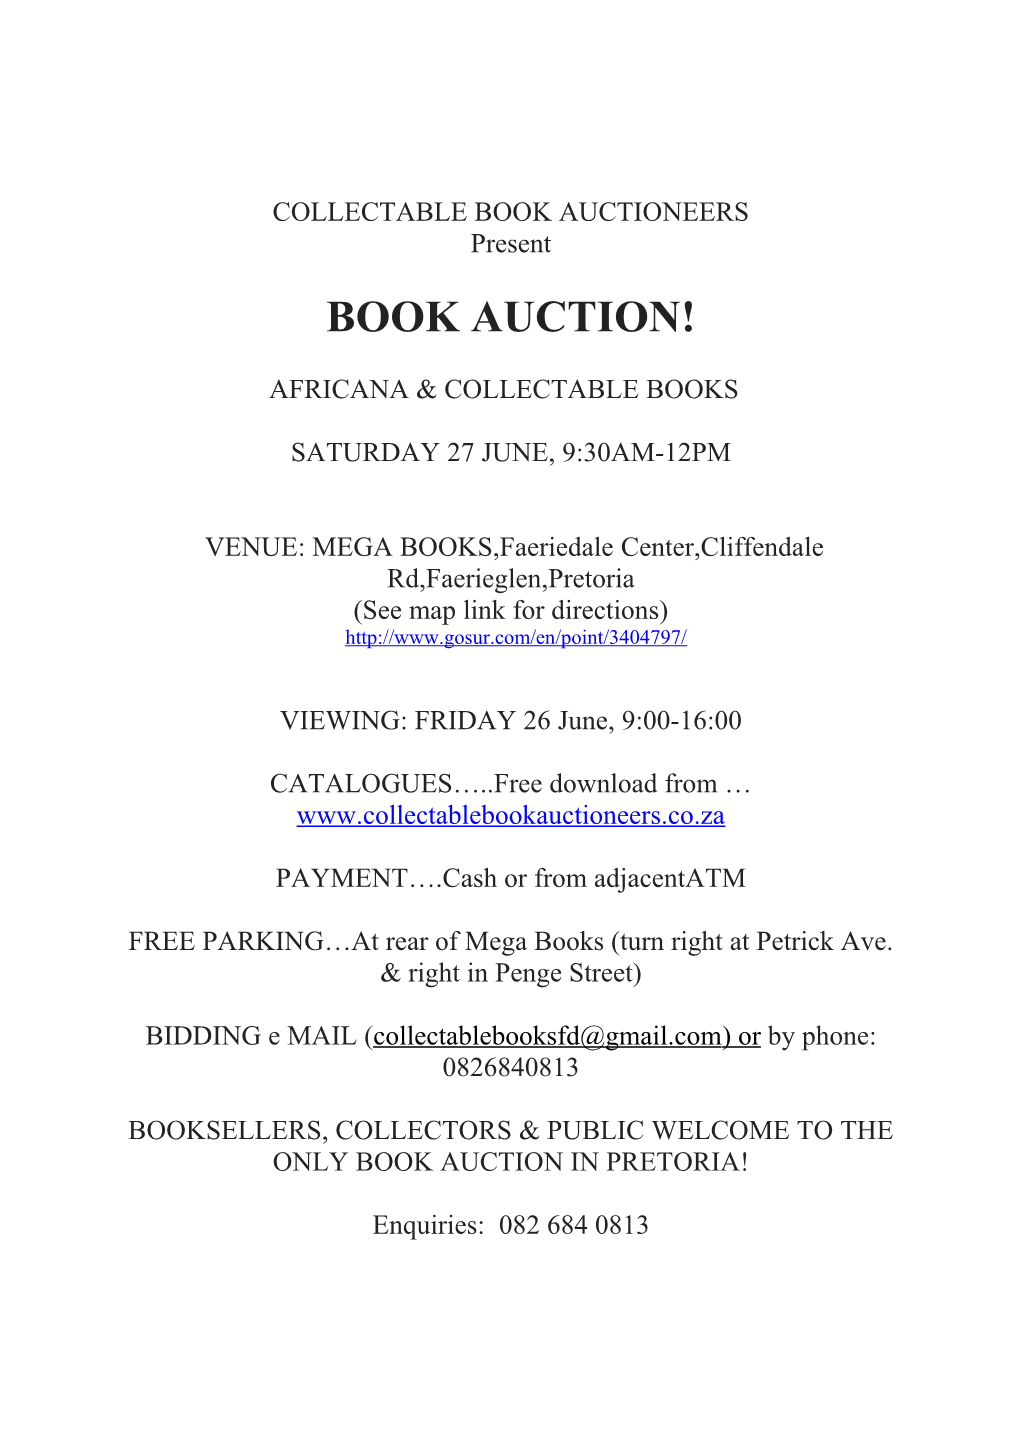 VENUE: MEGA BOOKS,Faeriedalecenter,Cliffendale Rd,Faerieglen,Pretoria